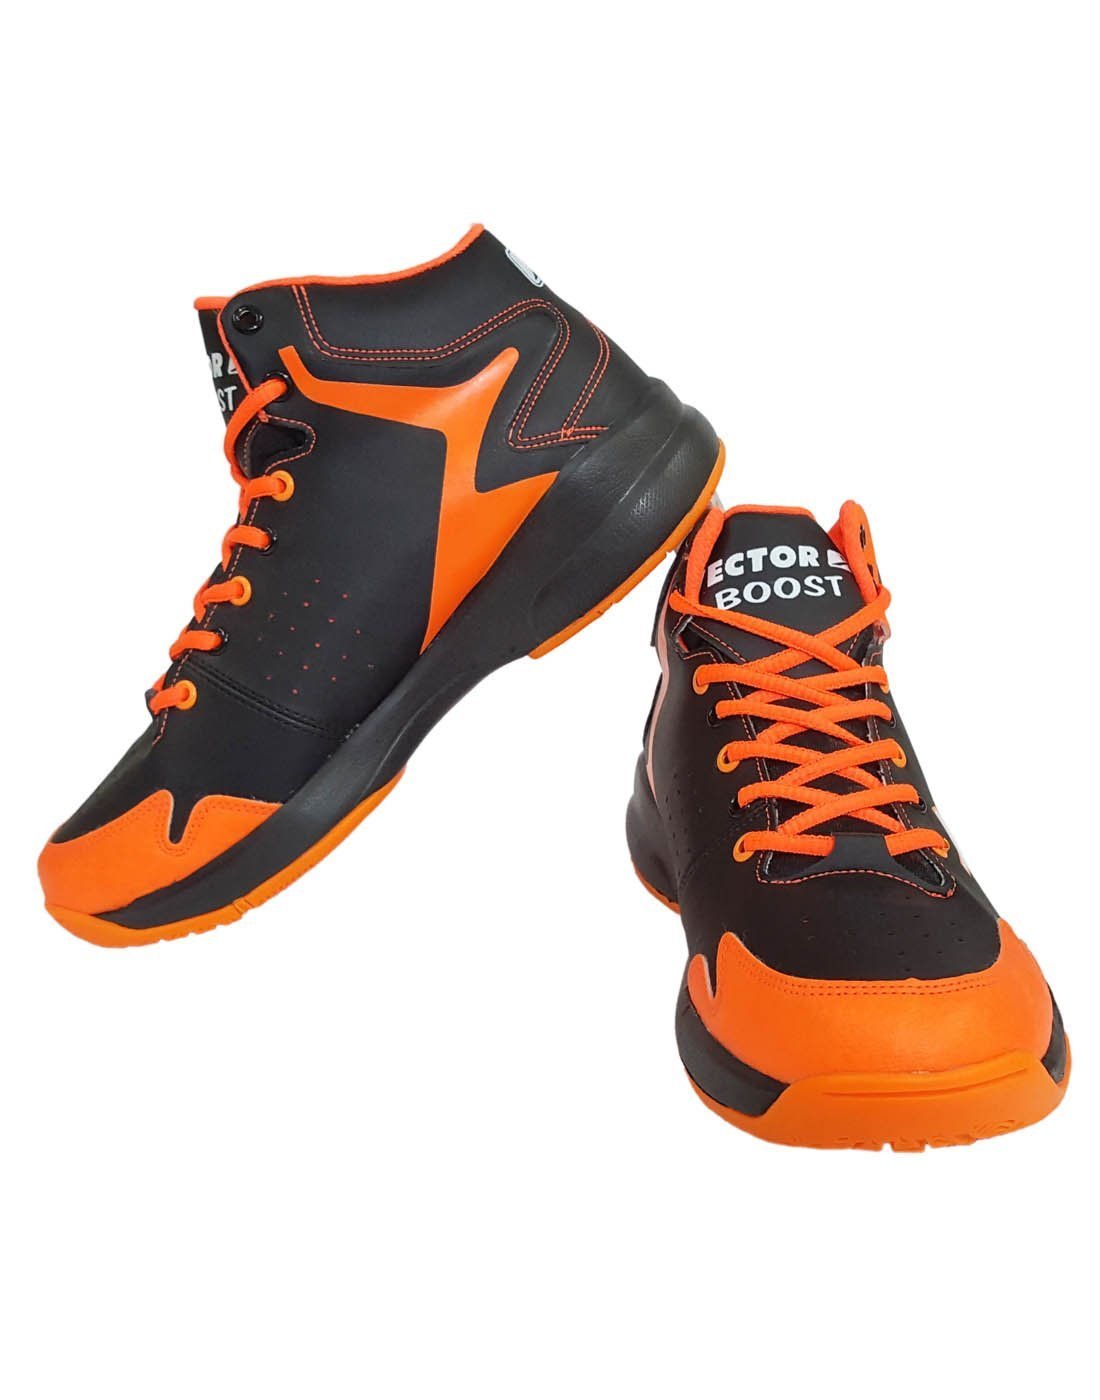 Vector X Boost Basketball Shoes (Black/Orange) - Best Price online Prokicksports.com